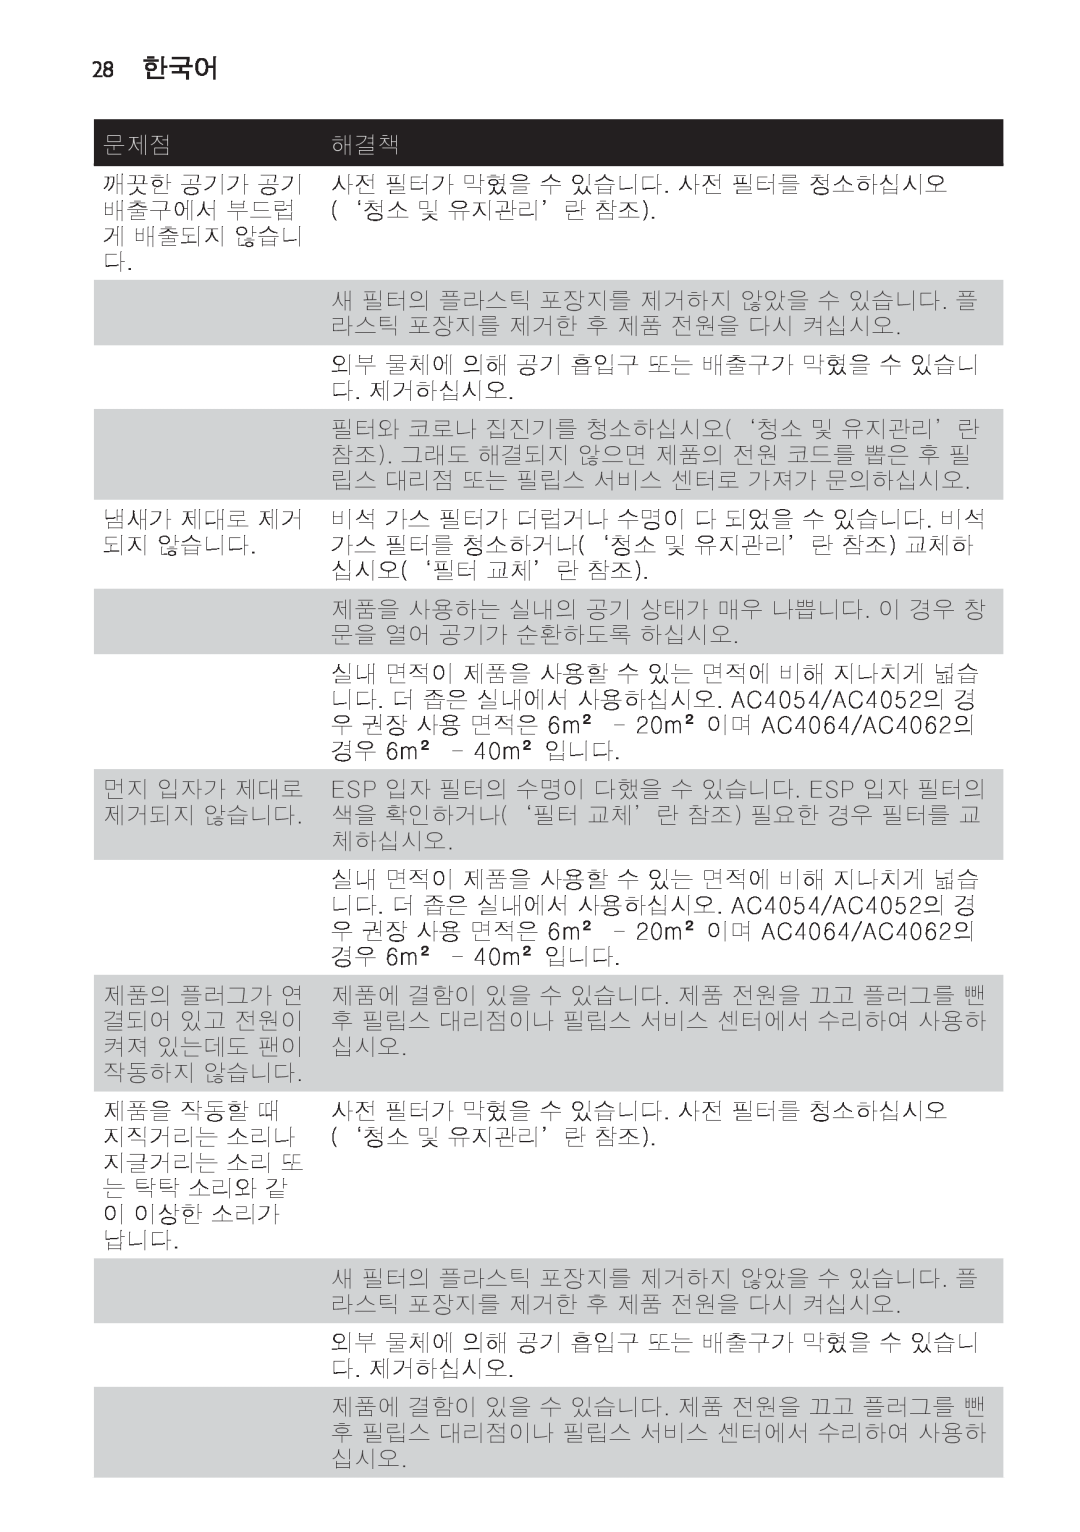 Philips AC4118, AC4108 manual 28 한국어 